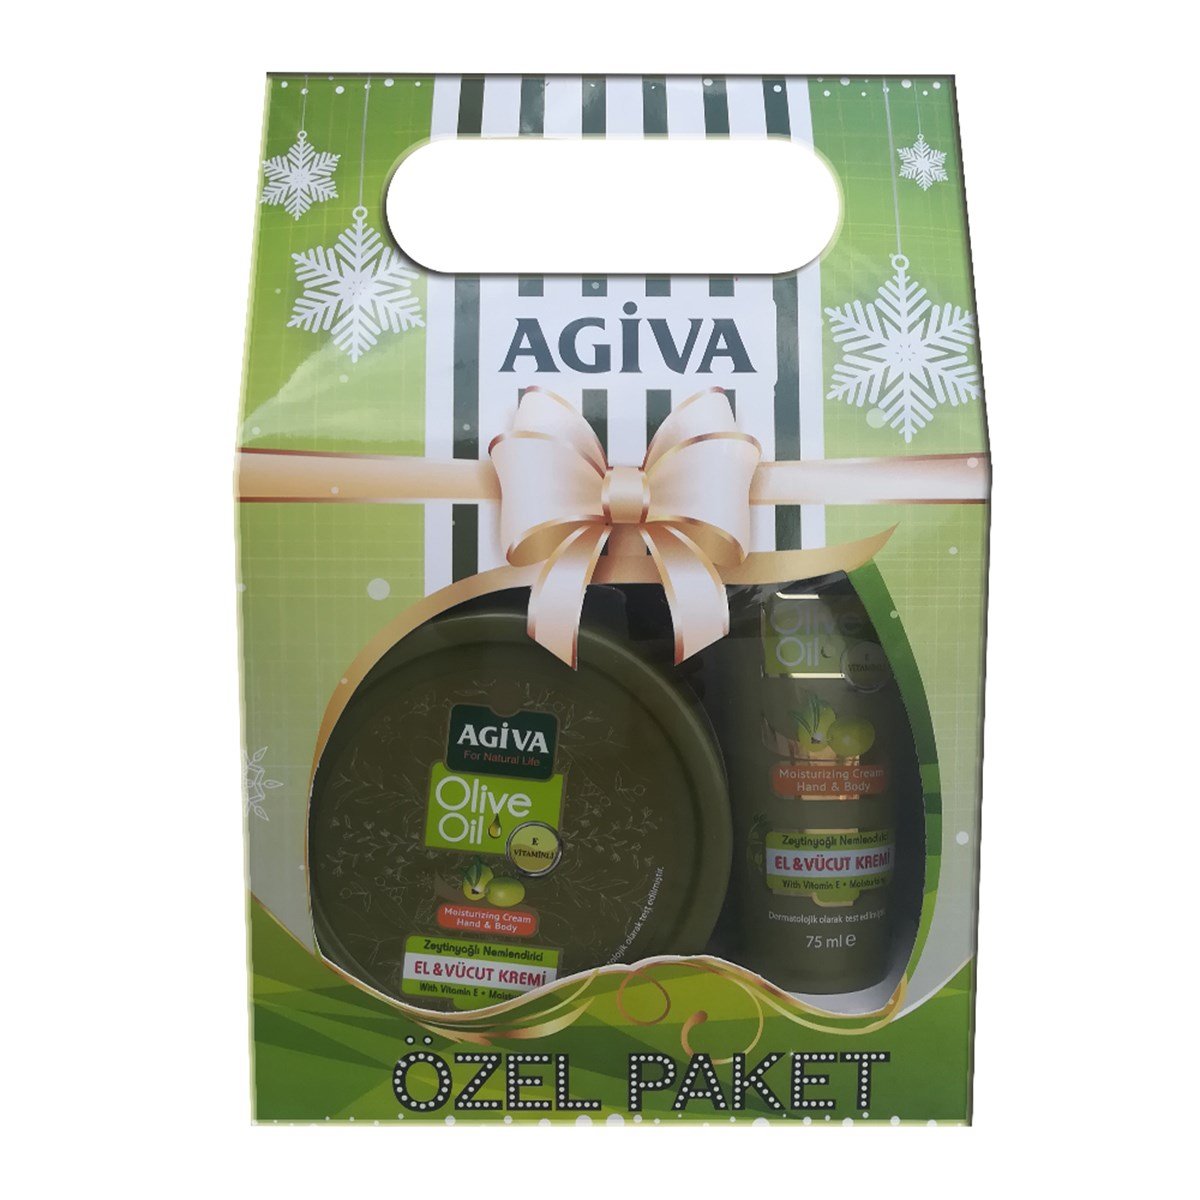 Agiva Soft Olive Oil Nemlendiricili Bakım Kremi Özel Paket 300 ml + 75 ml -  Paltin